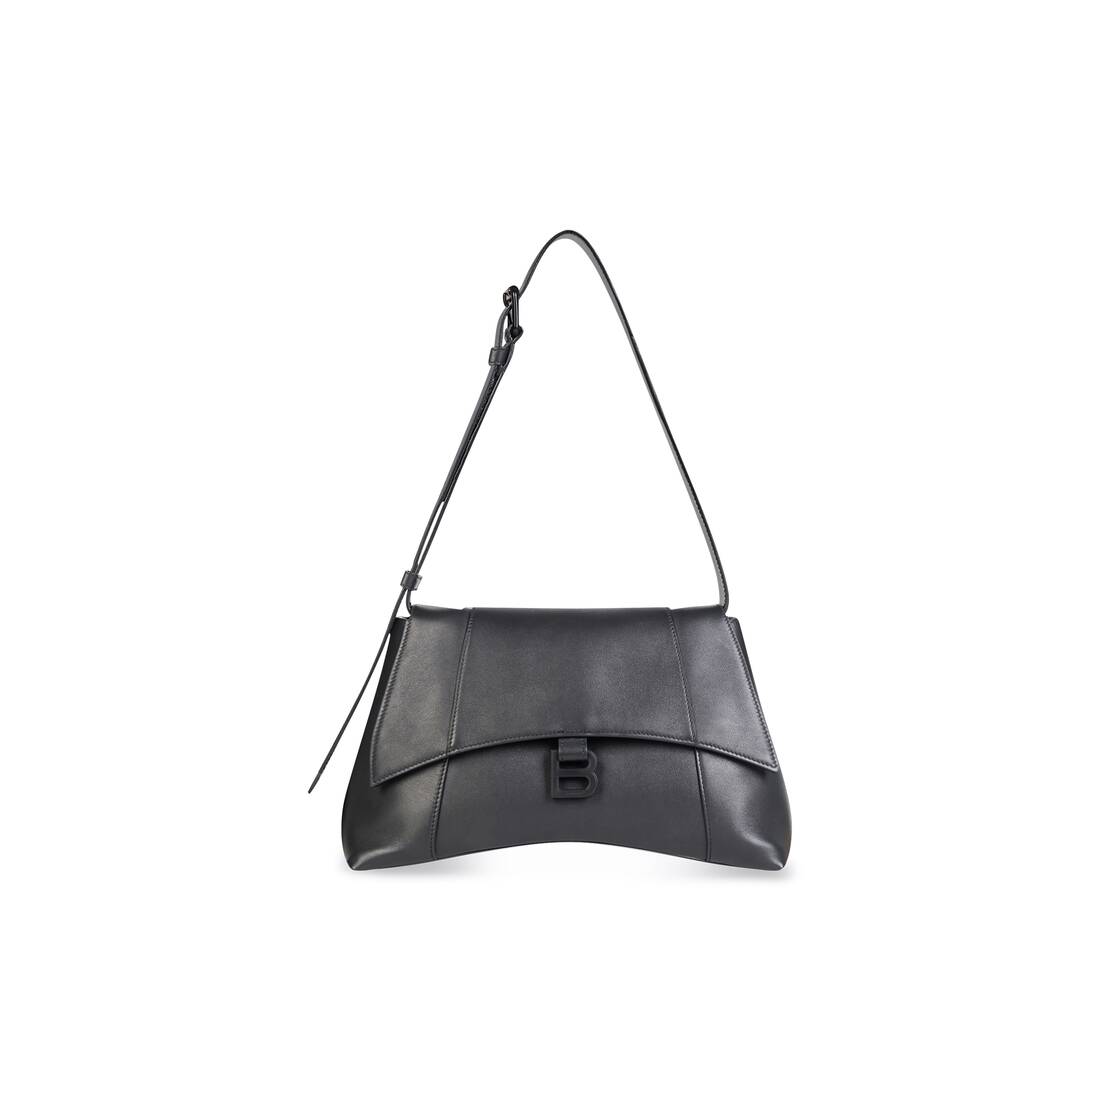 Balenciaga Lunch Box Black Small Shoulder Bag 638207